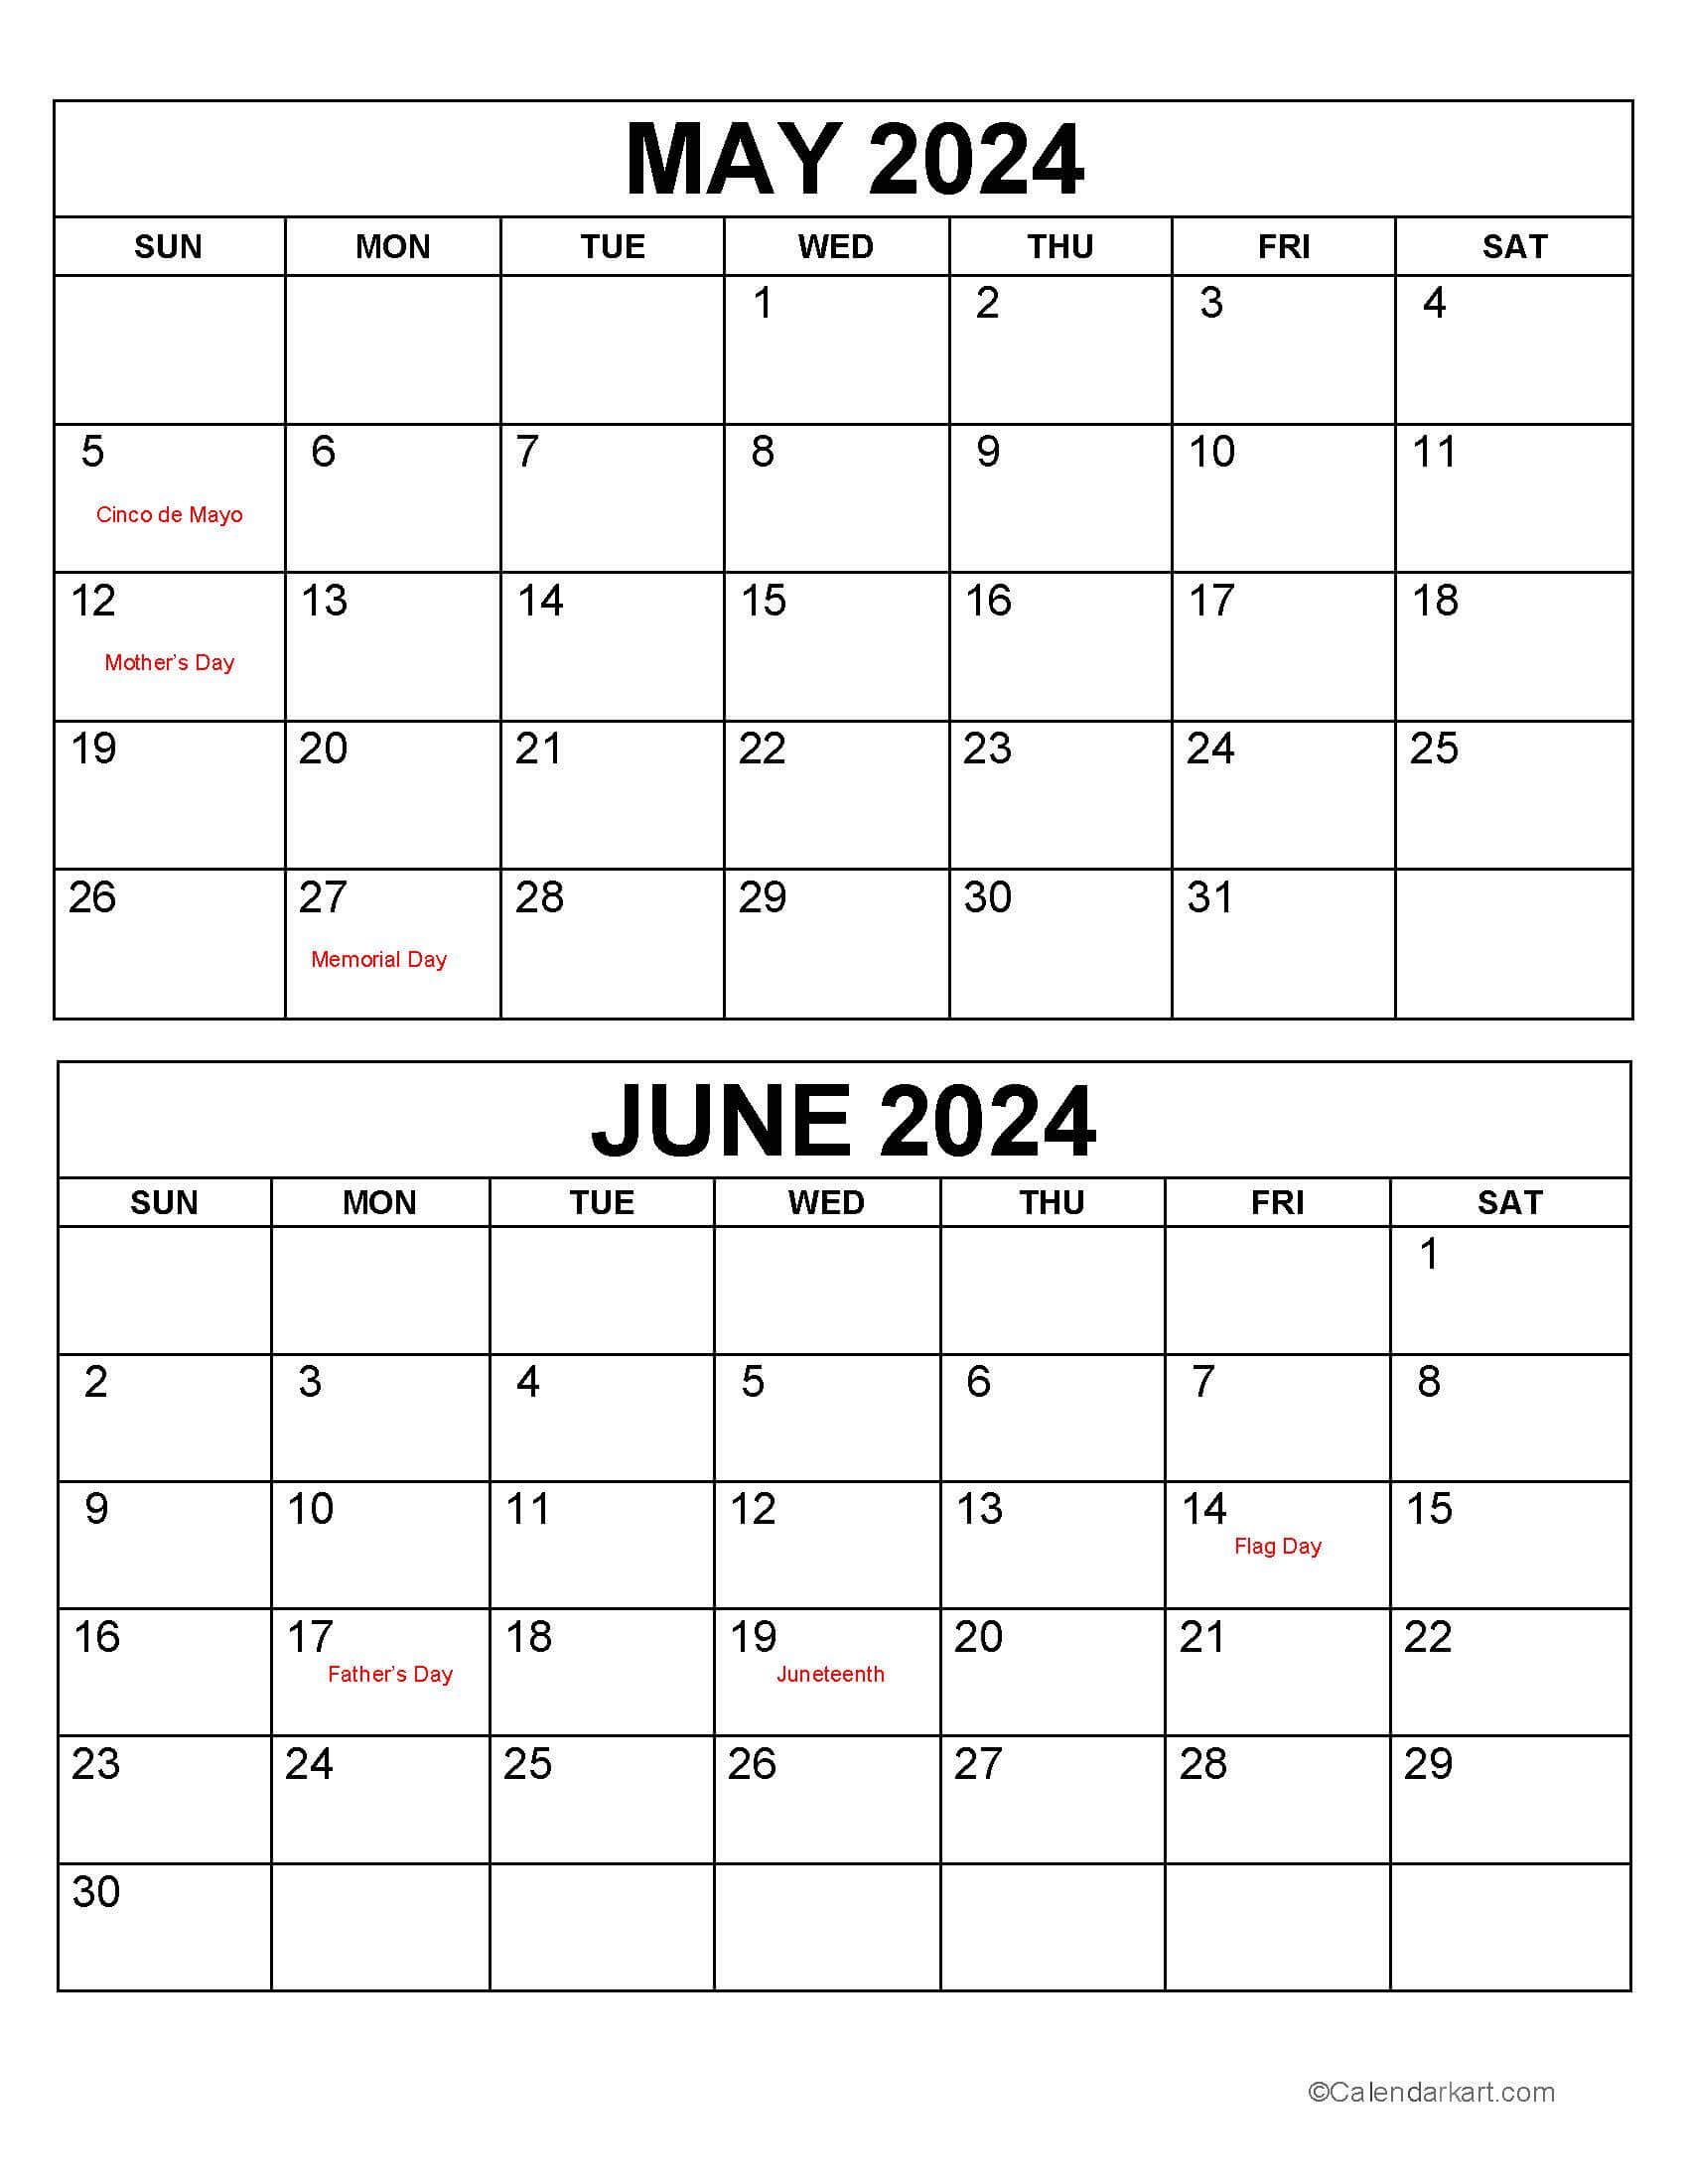 May June 2024 Calendars (3Rd Bi-Monthly) - Calendarkart throughout 2024 May June July Calendar